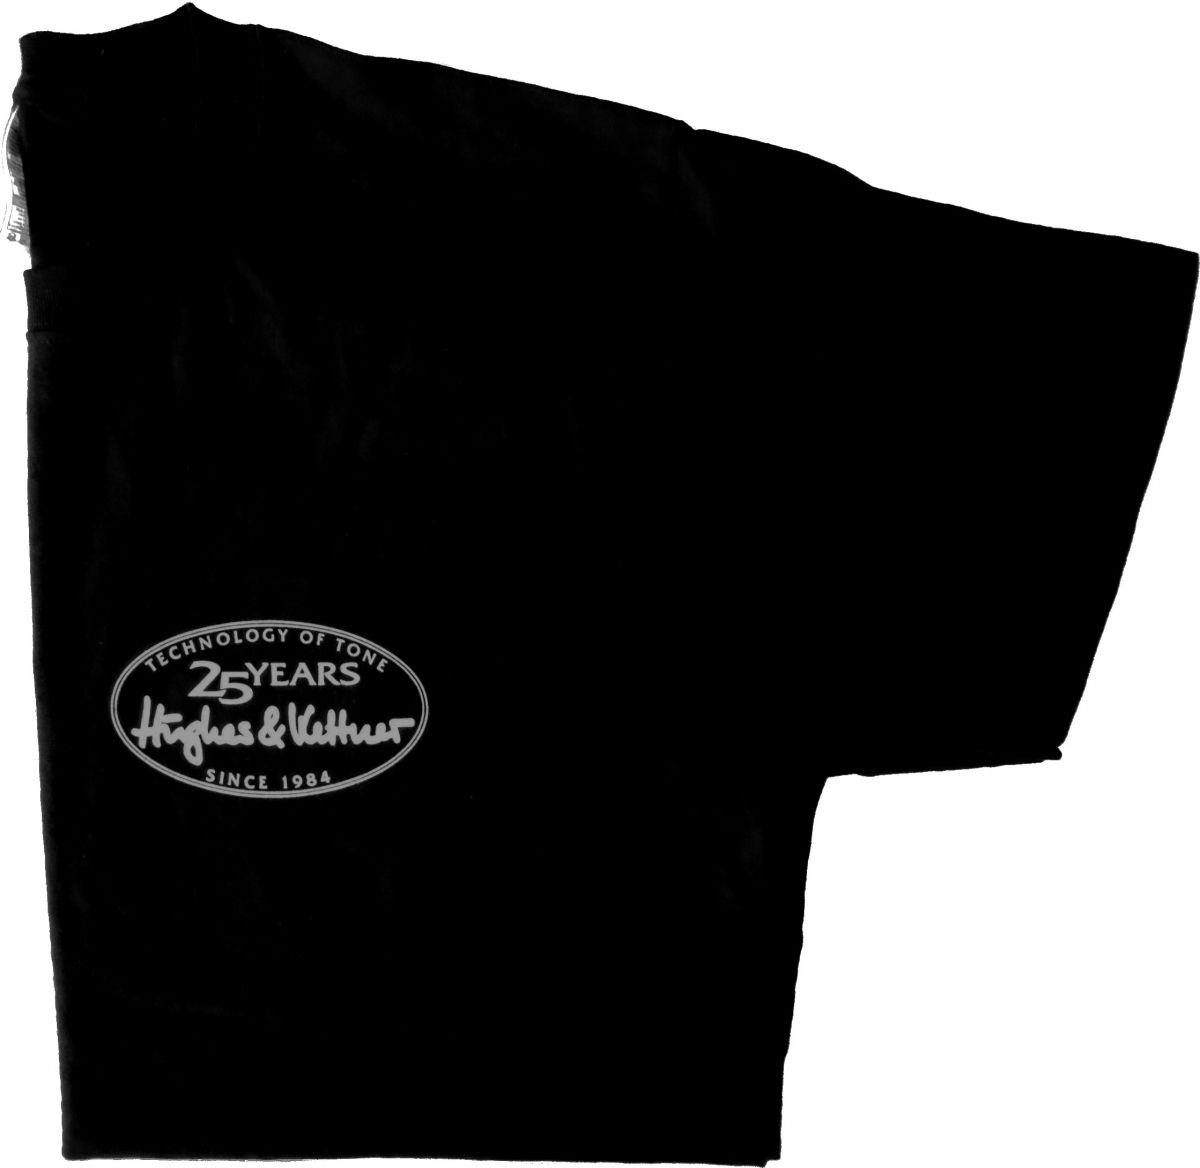 T in Oval Logo - Hughes & Kettner Oval Logo T Shirt (Large)